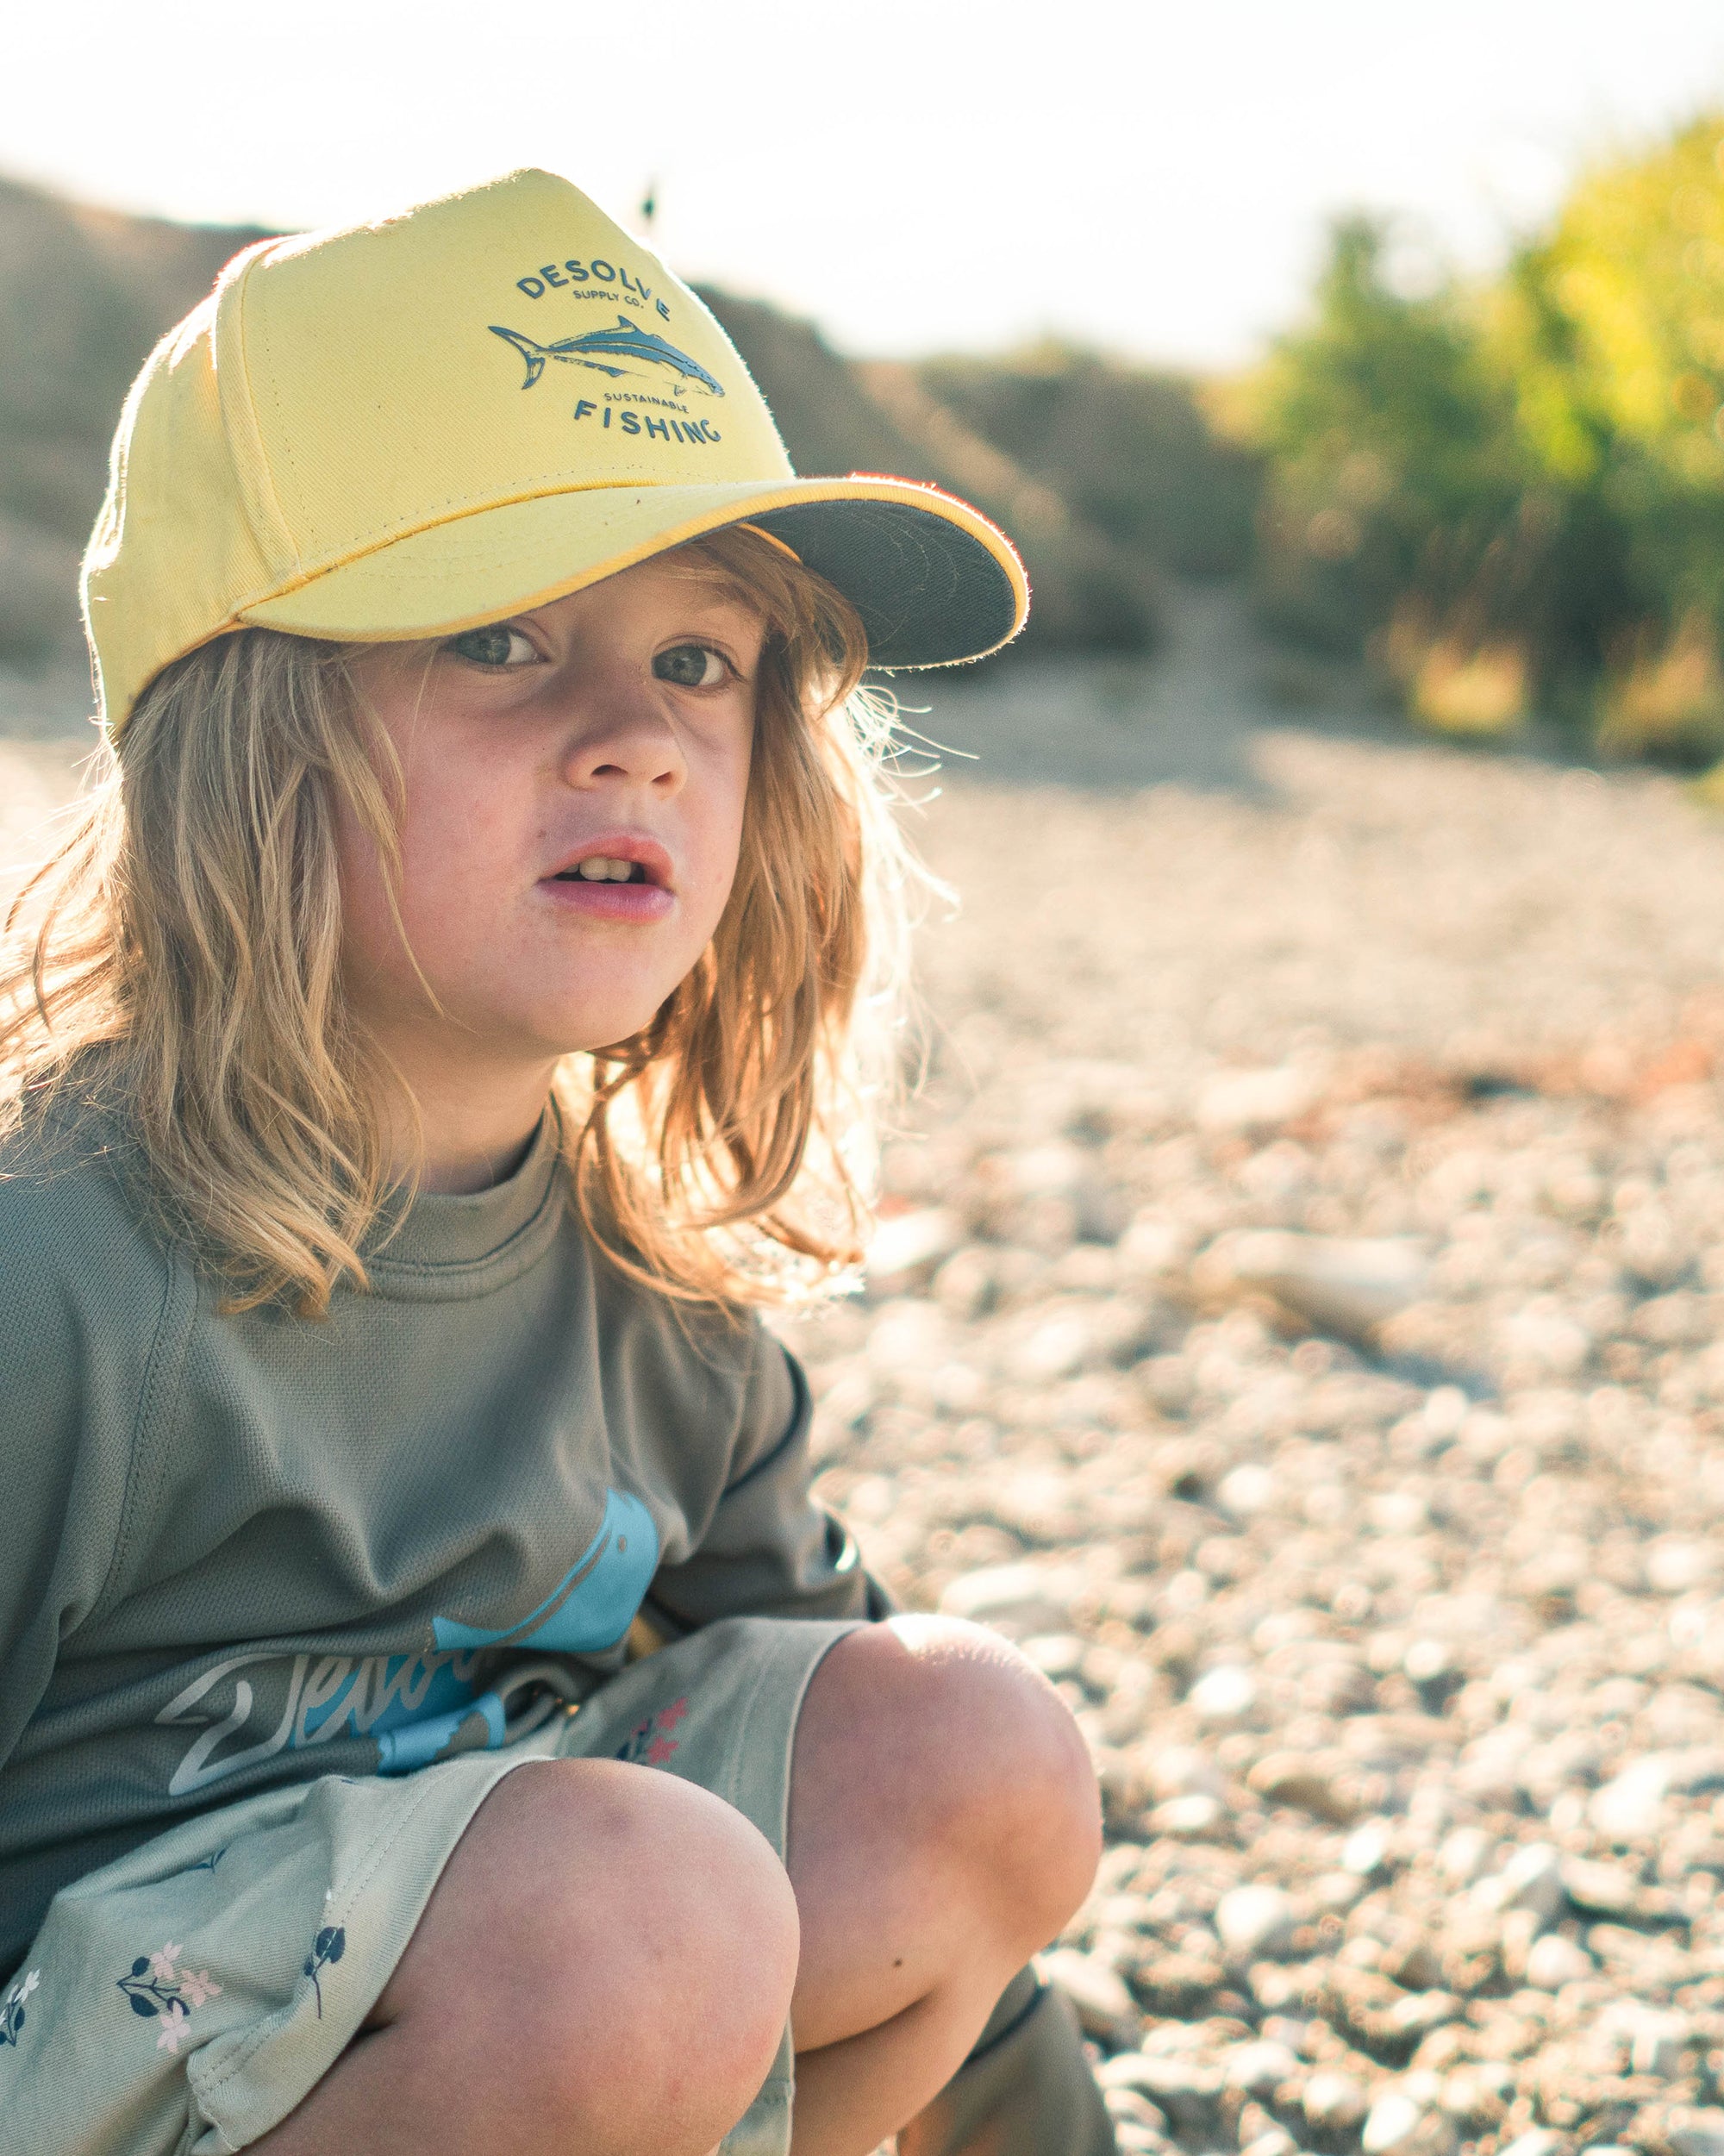 Kids Clothing, Desolve, Fishing Clothing NZ - Desolve Supply Co.